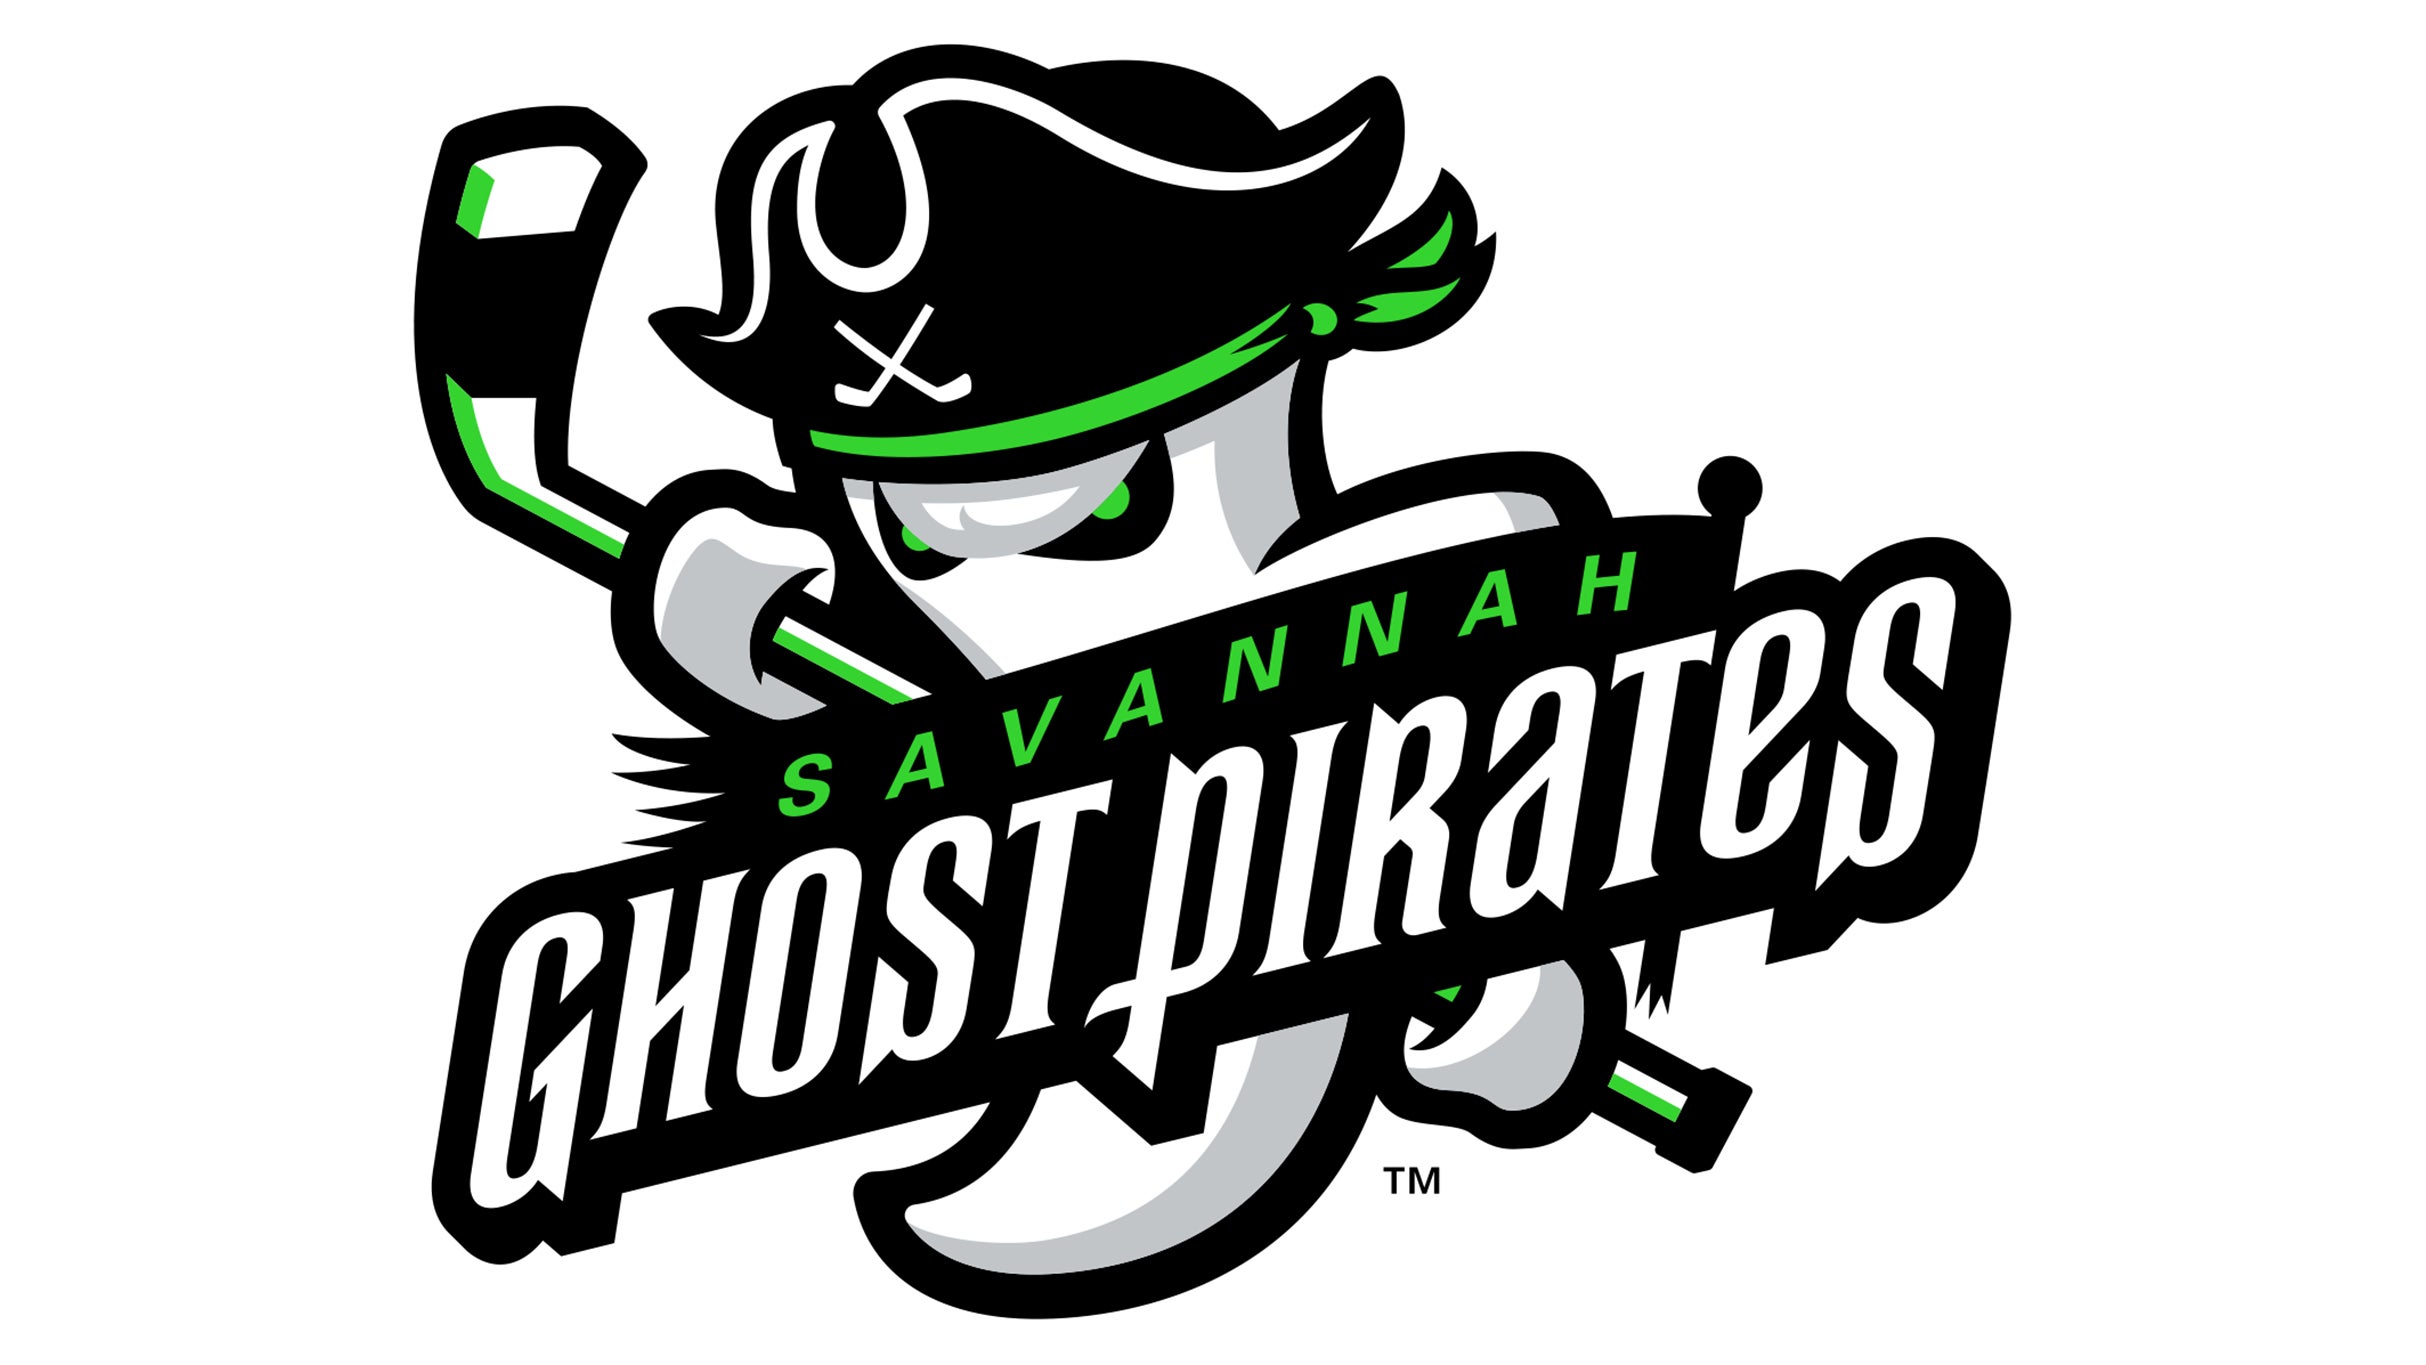 Savannah Ghost Pirates in Savannah promo photo for Vystar Club Members presale offer code